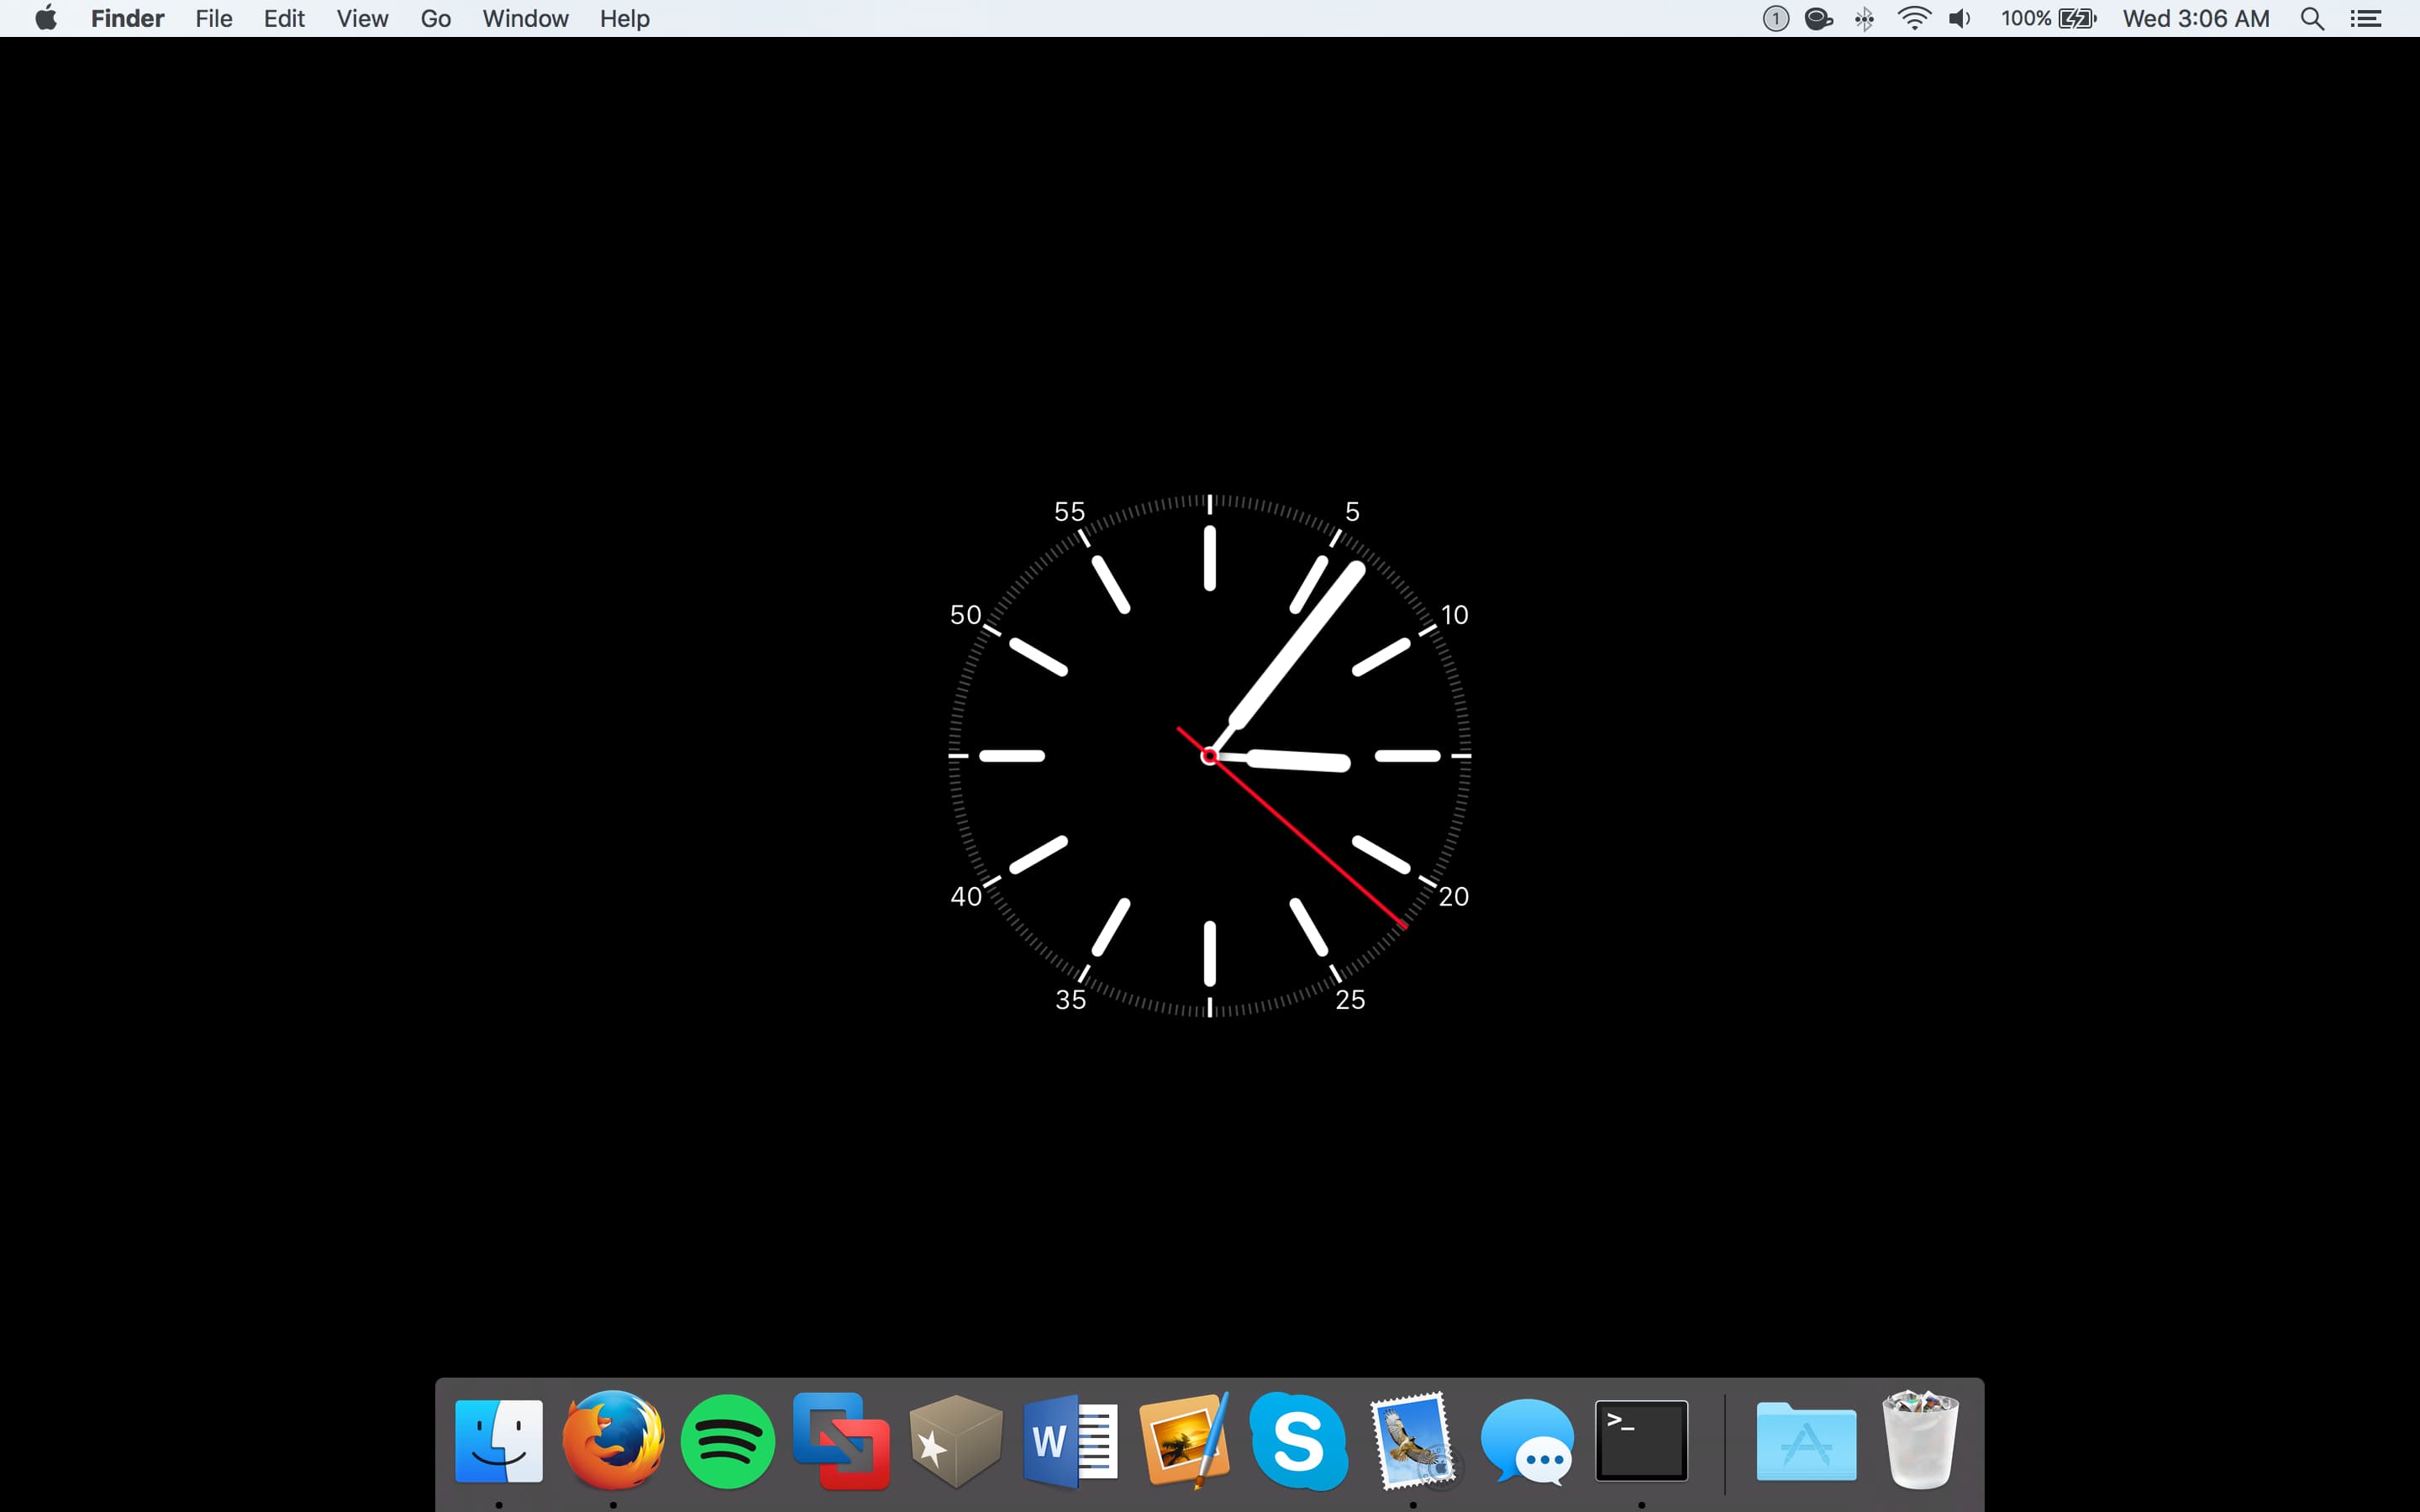 Screen saver set as Mac wallpaper